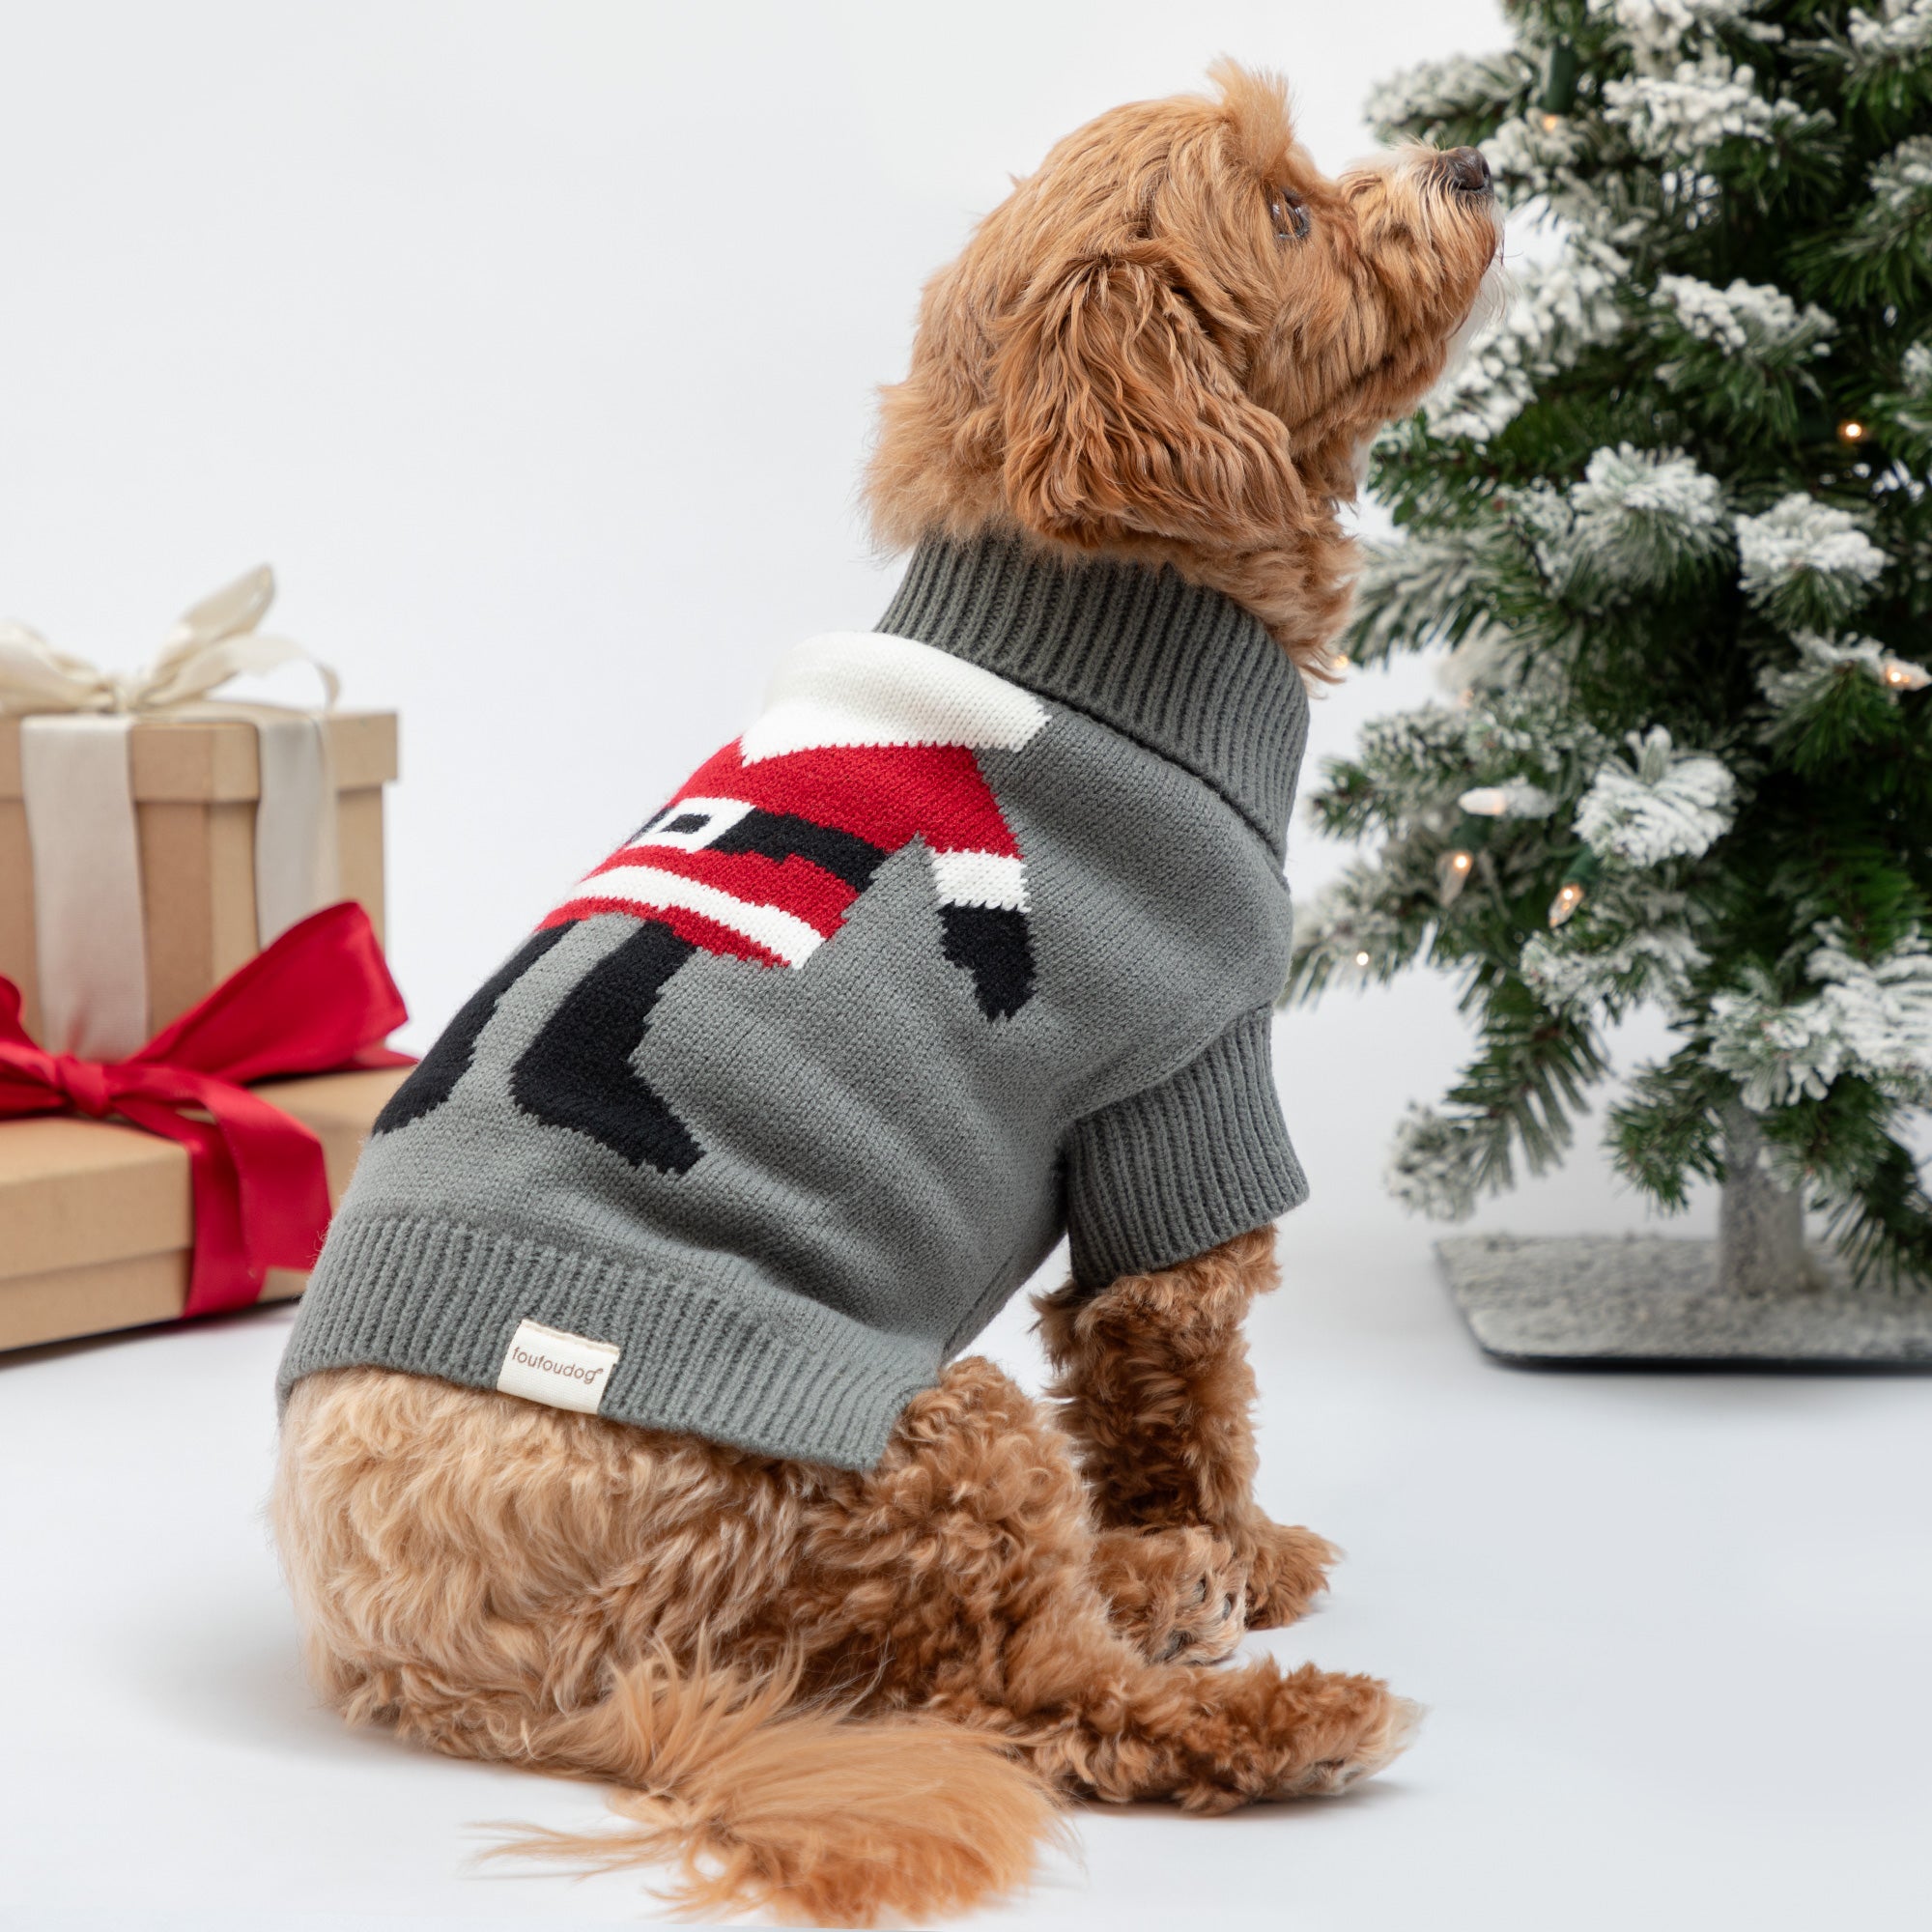 Cozy Christmas Pet Sweater - Santa - S